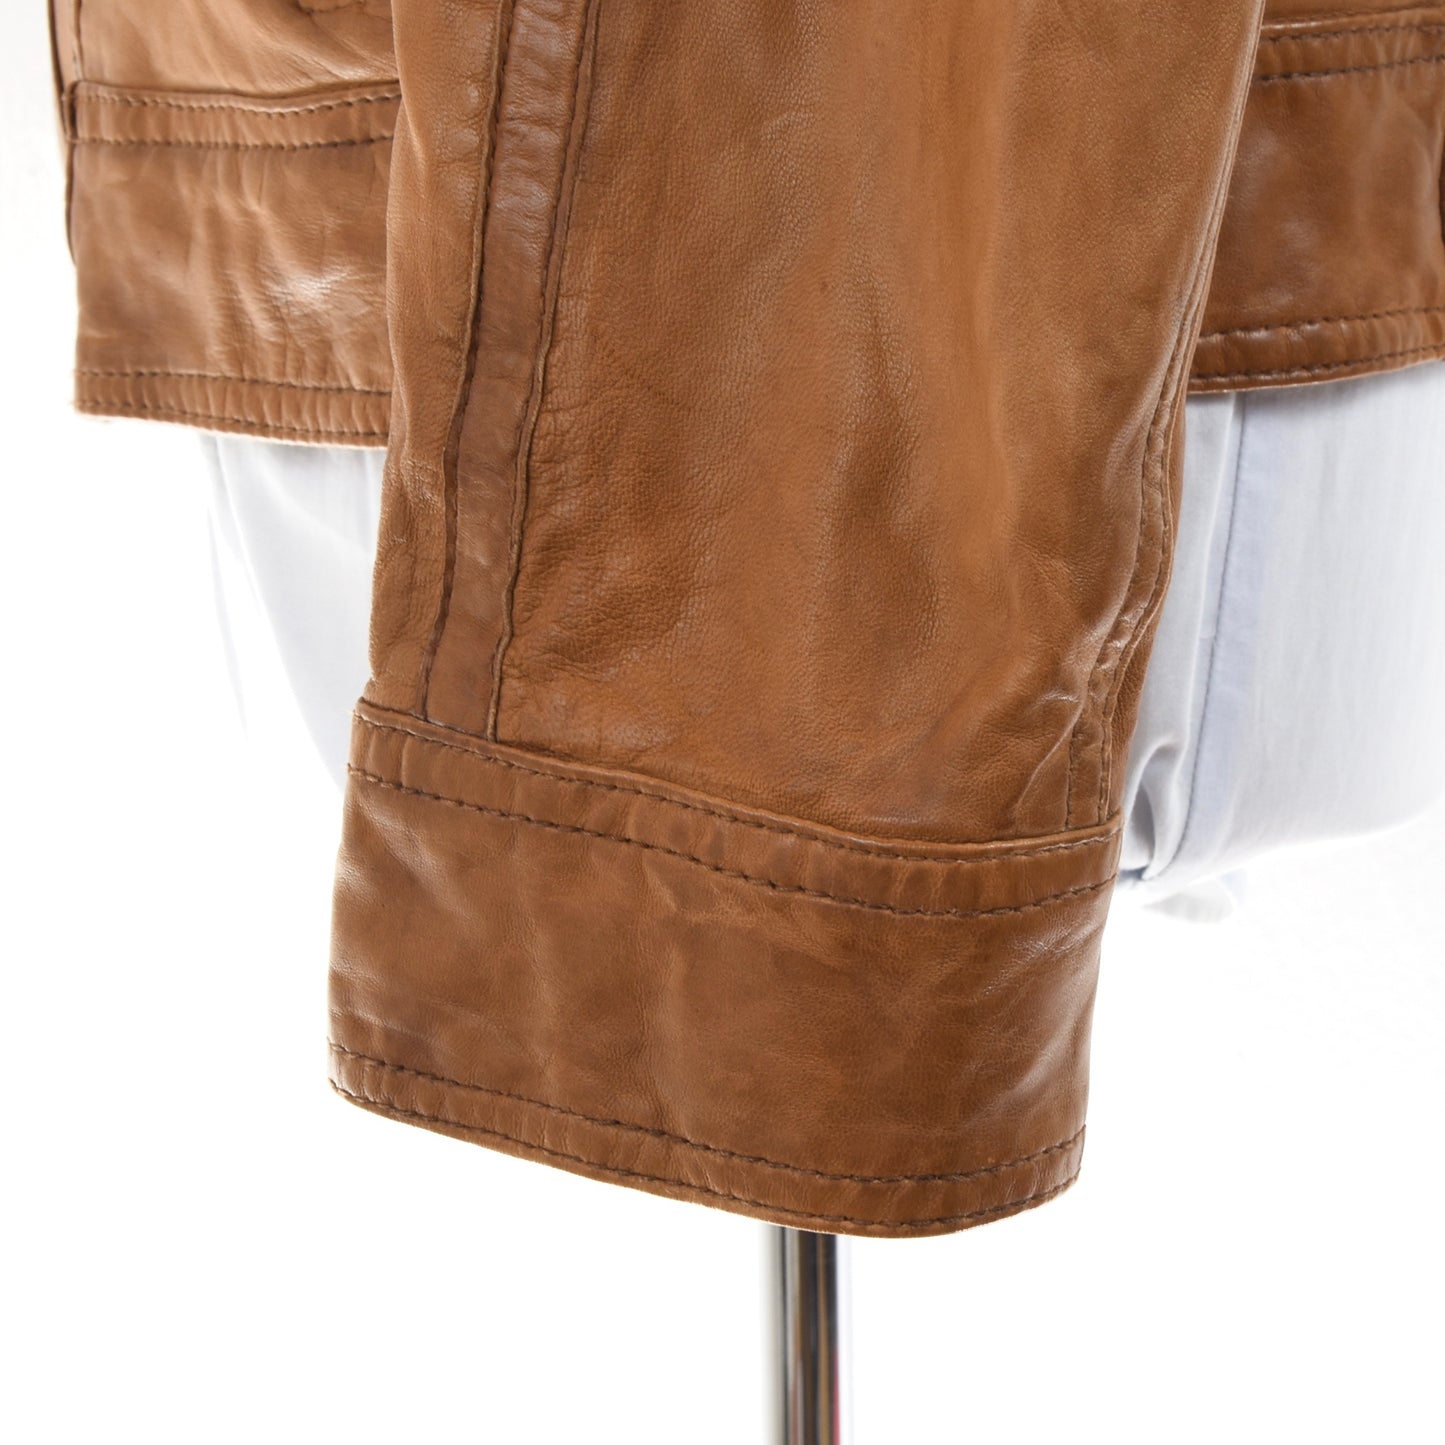 Milestone Lamb Leather Jacket Size 48/S - Tan